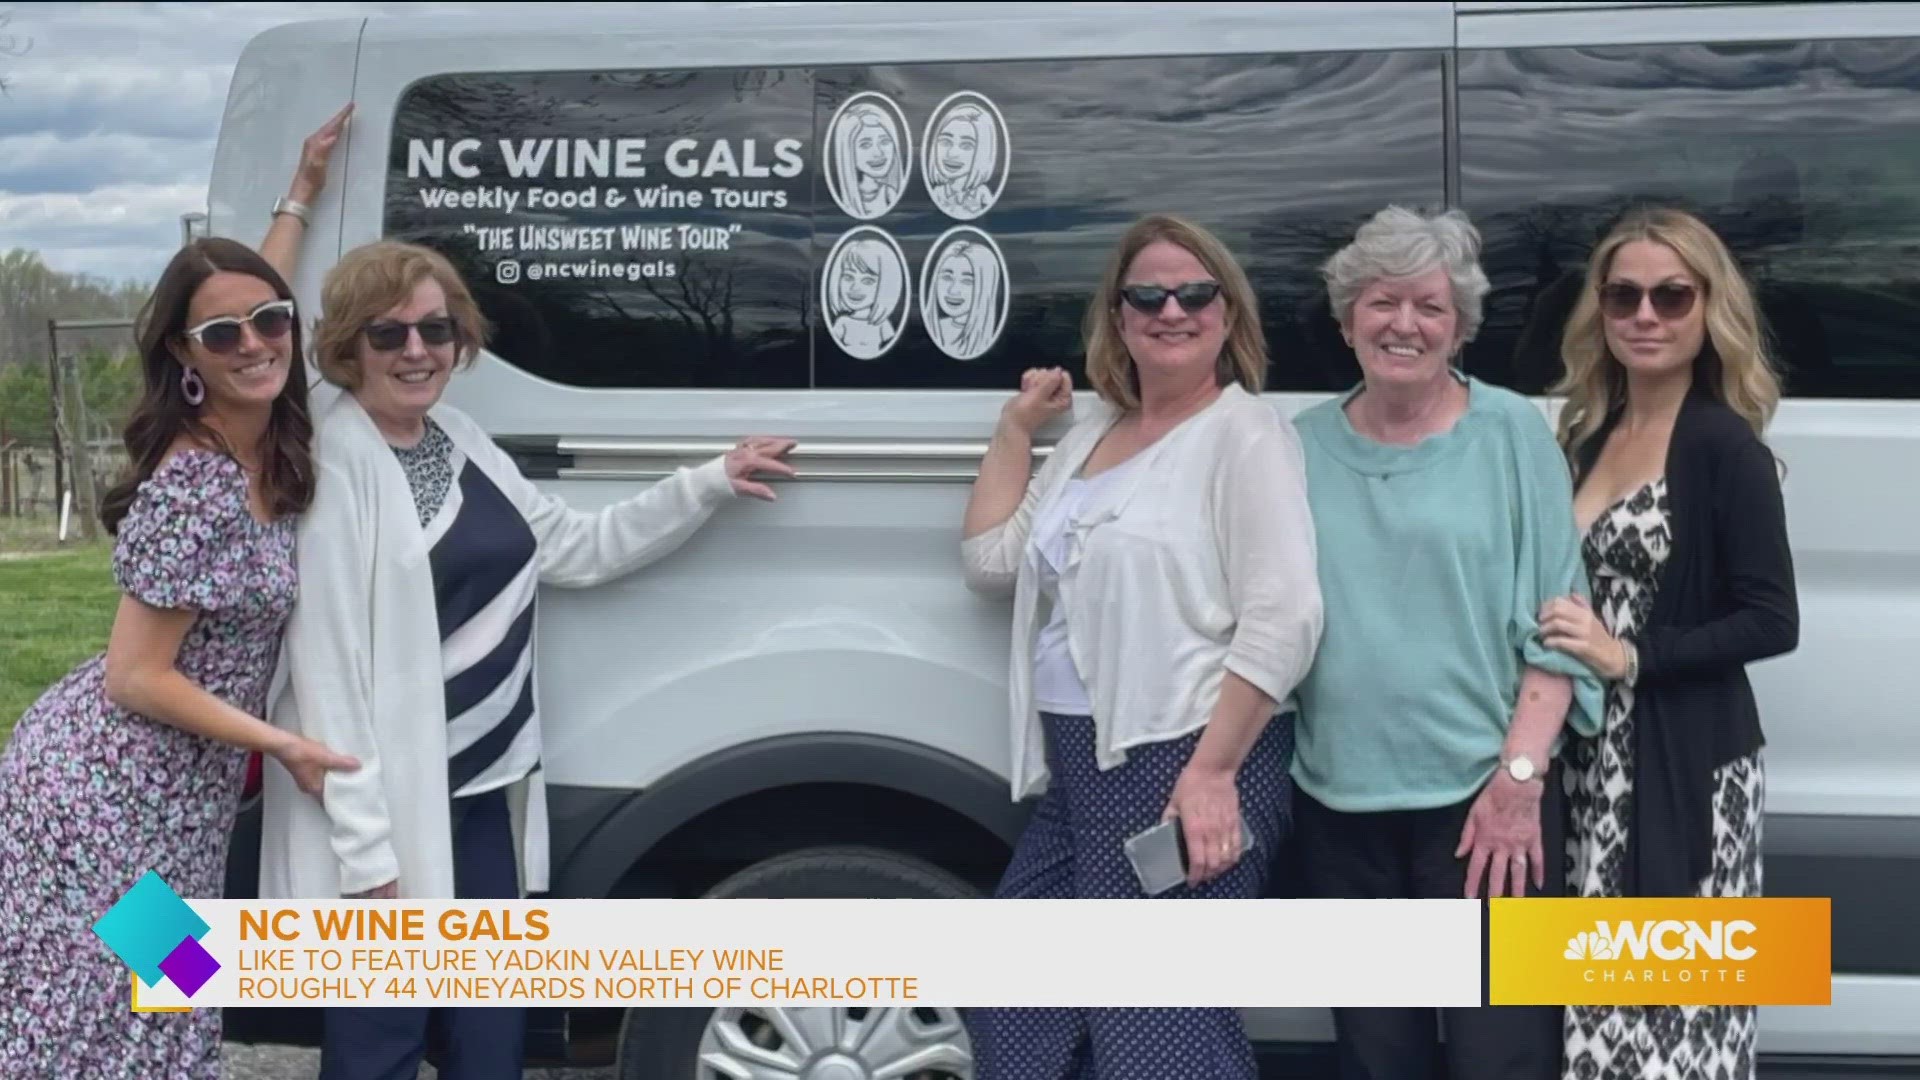 Tour the Carolinas wines with NC Wine Gals